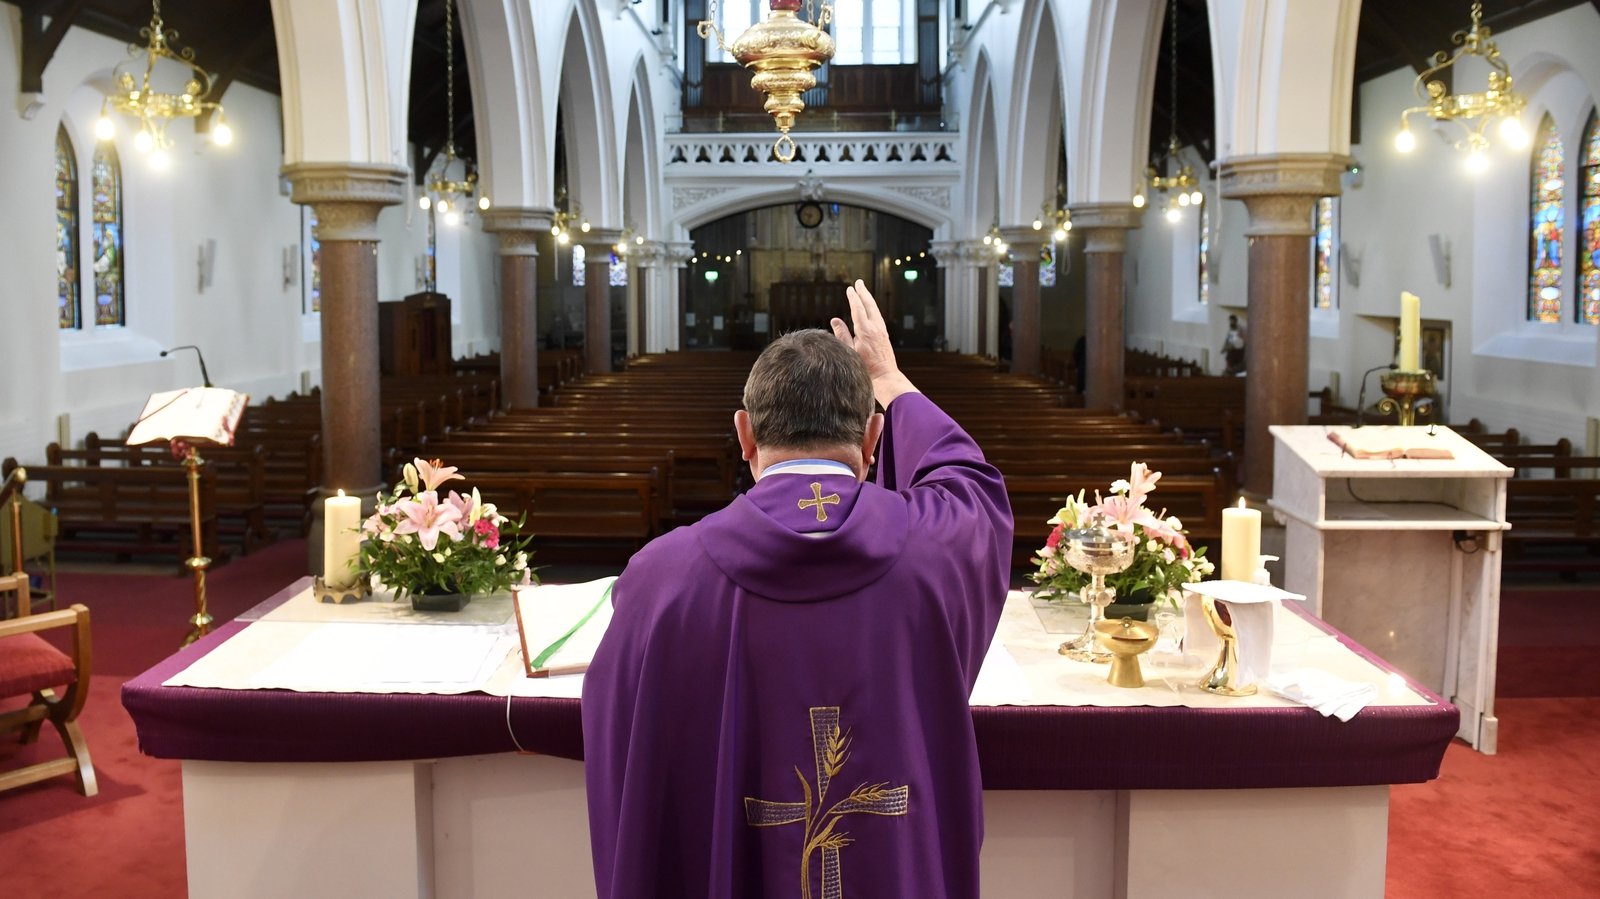 The Collapse of the Catholic Faith in Ireland